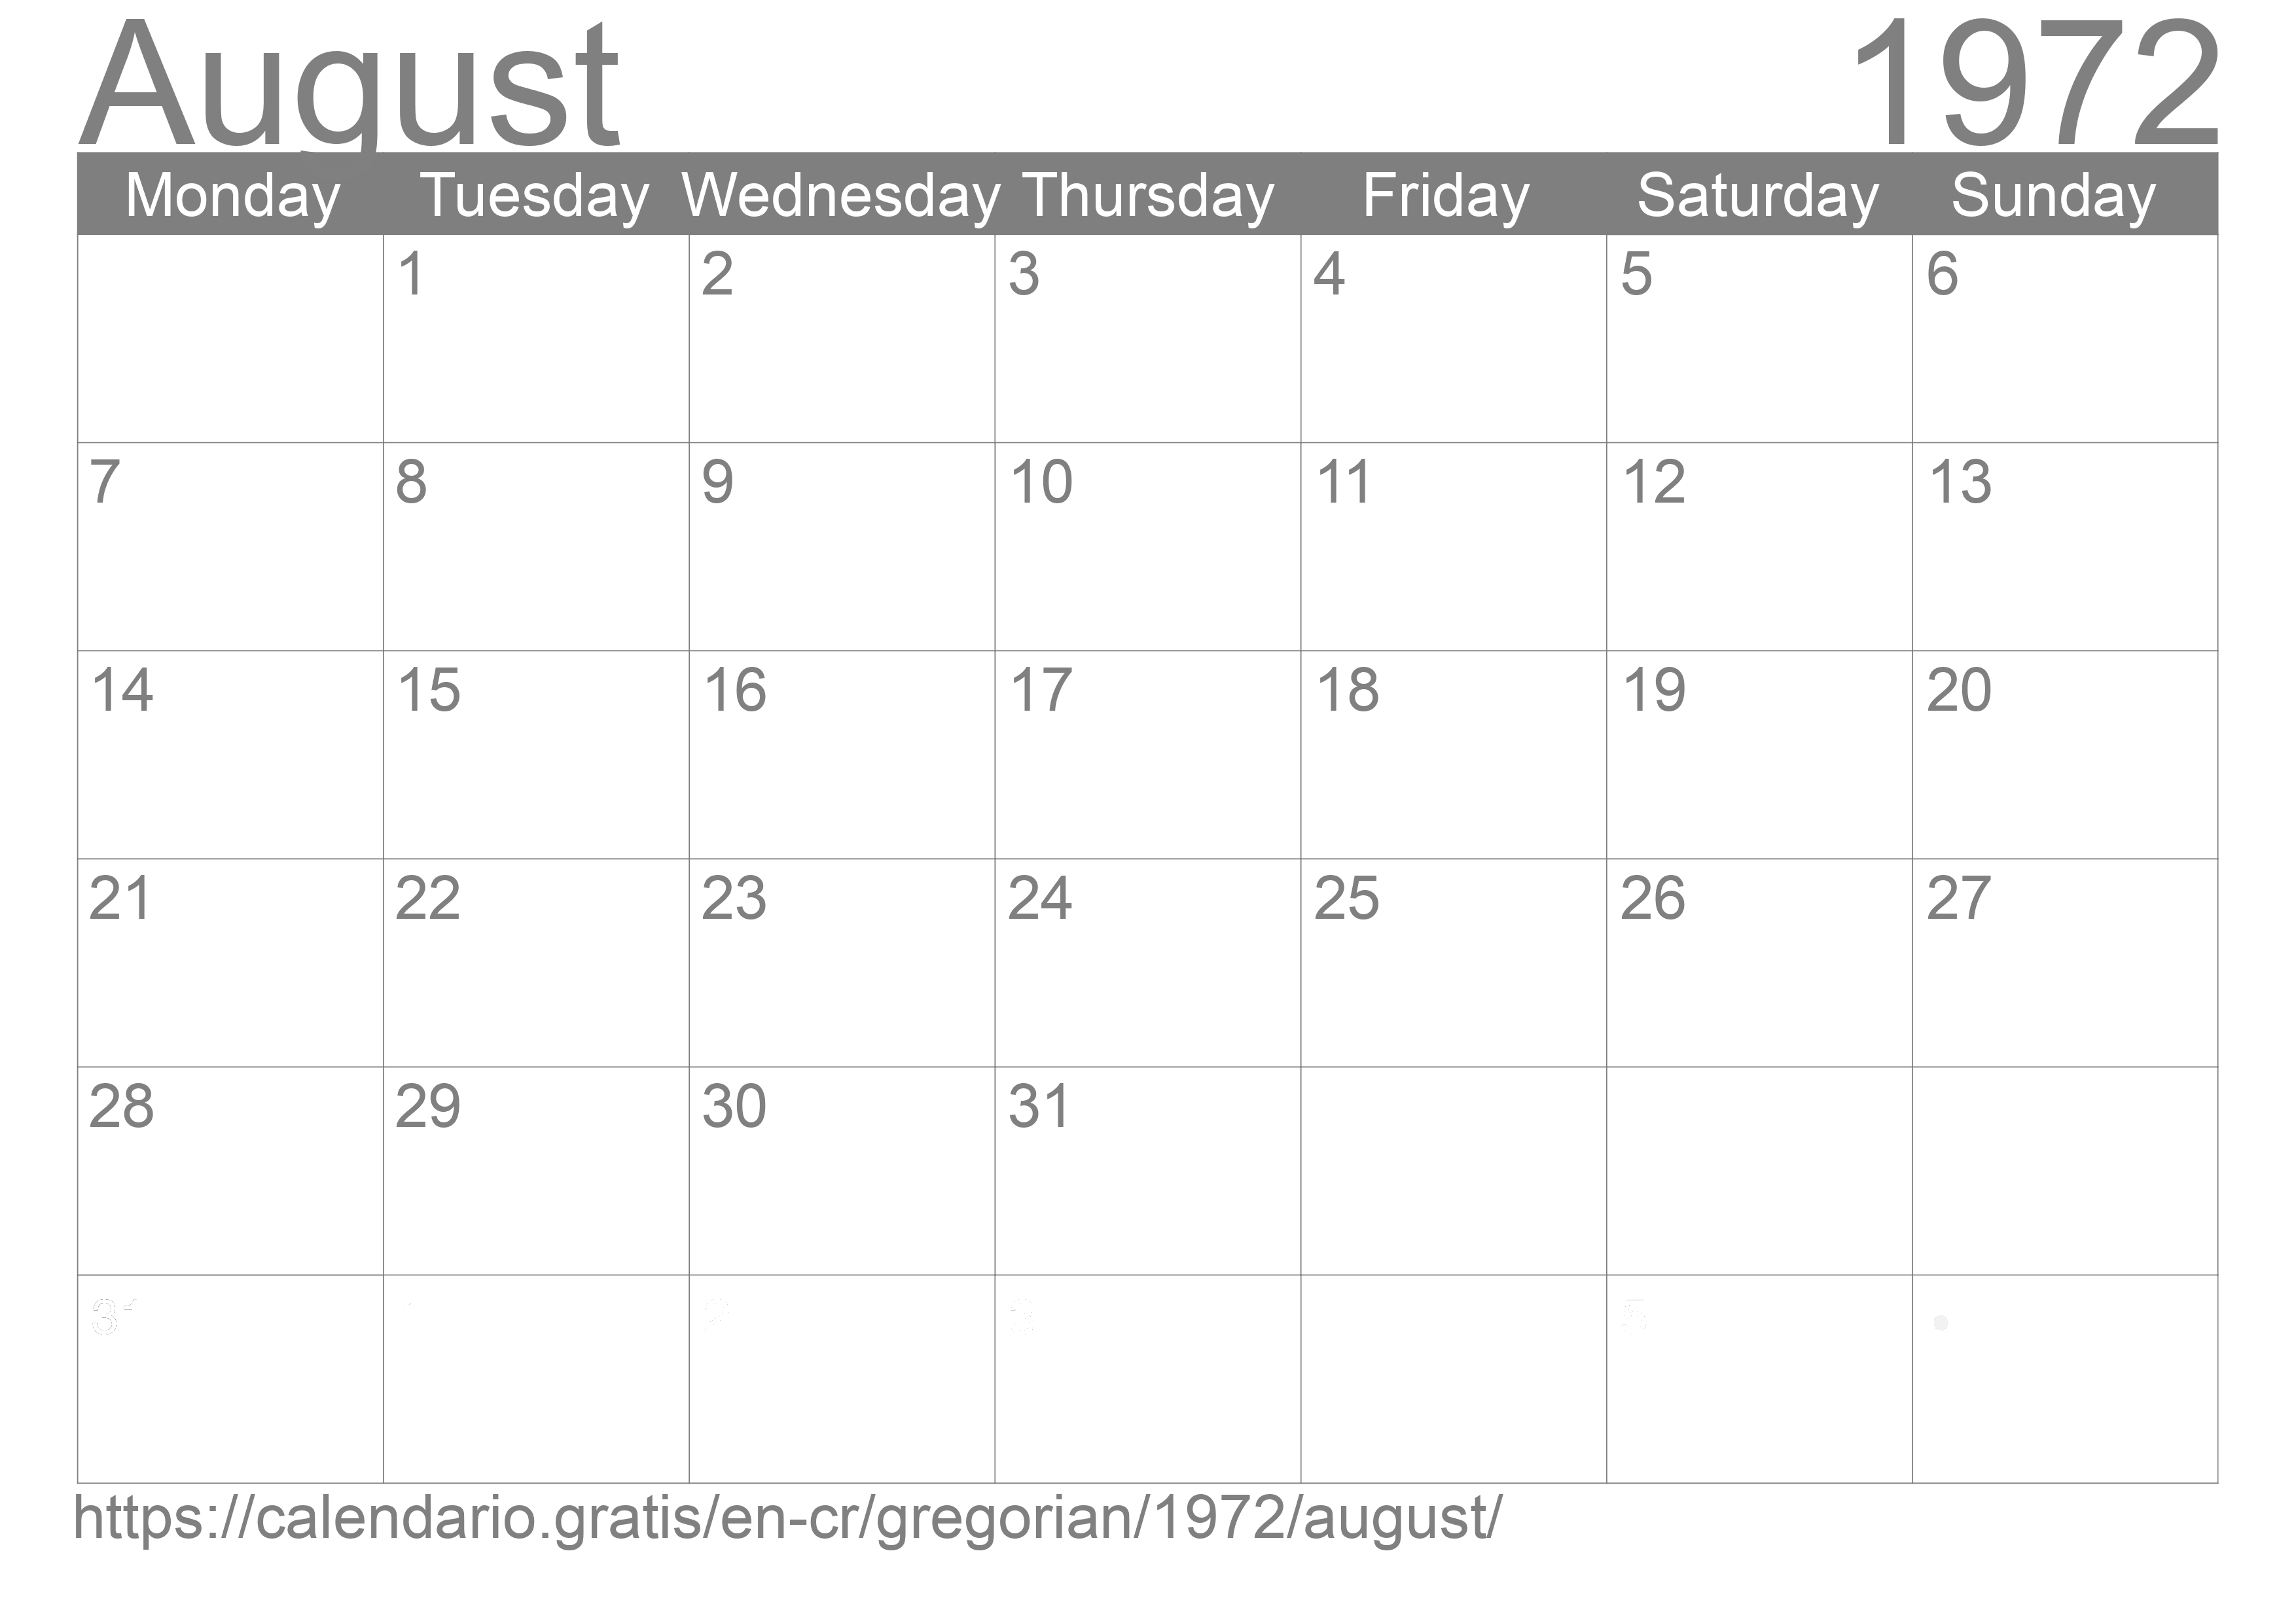 Calendar August 1972 to print